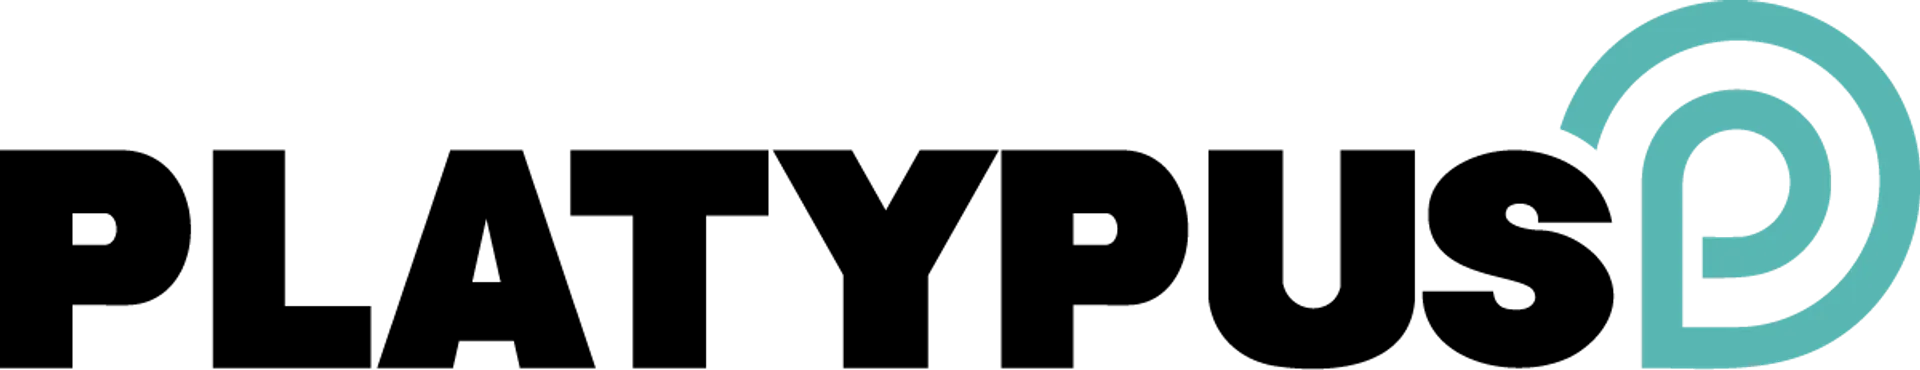 PLATYPUS logo of current flyer